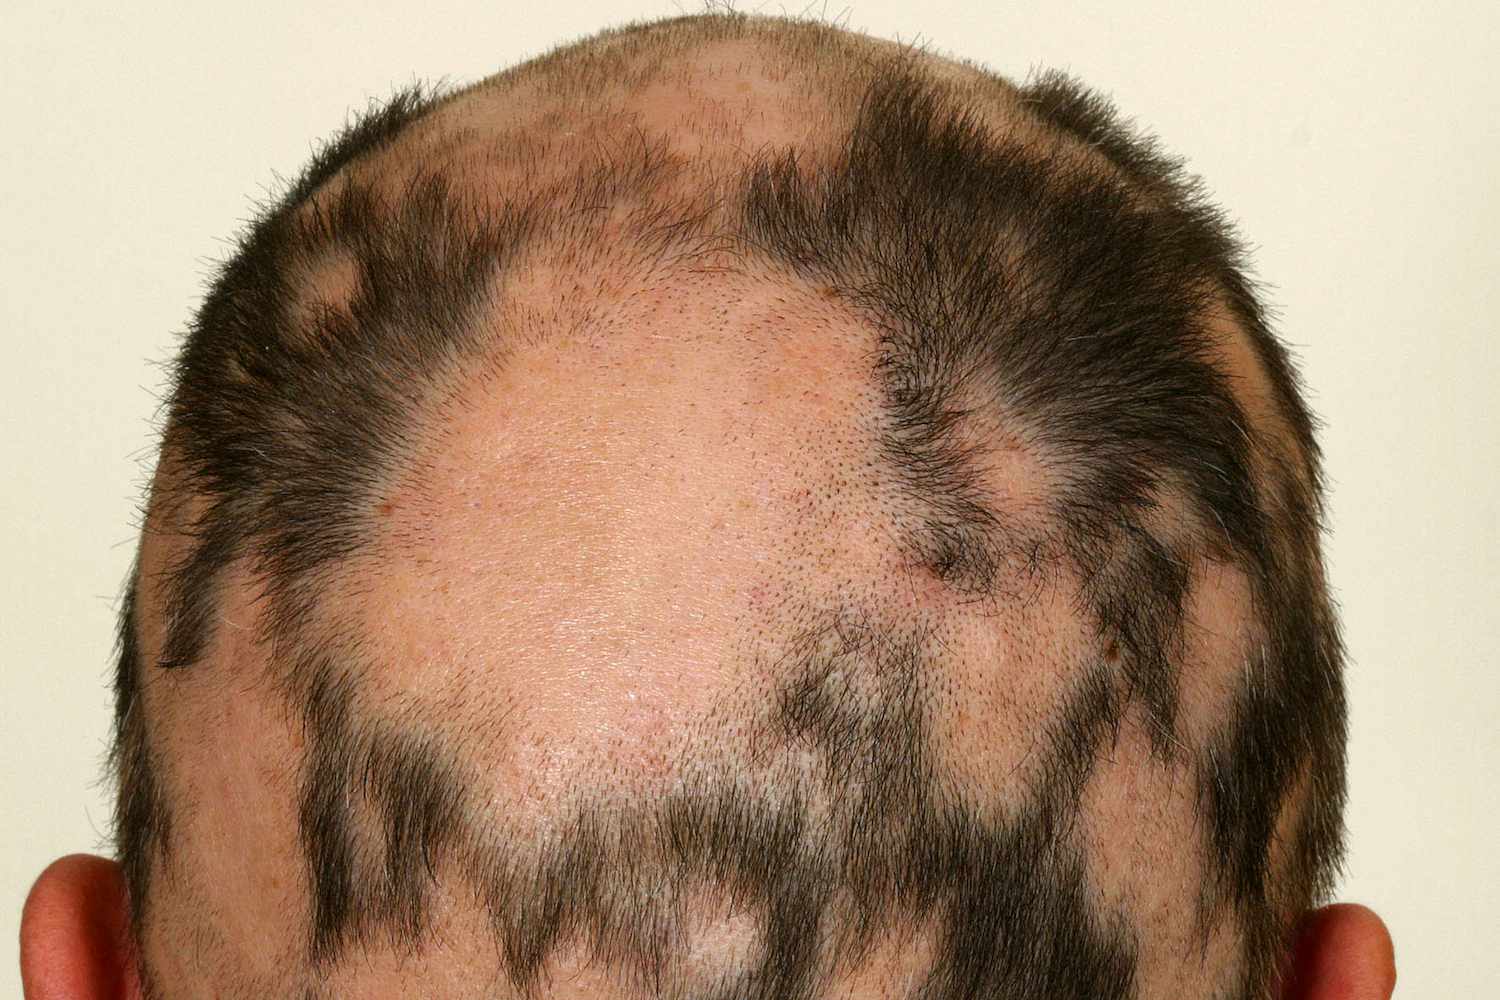 European Commission Grants Approval of Ritlecitinib for Severe Alopecia Areata